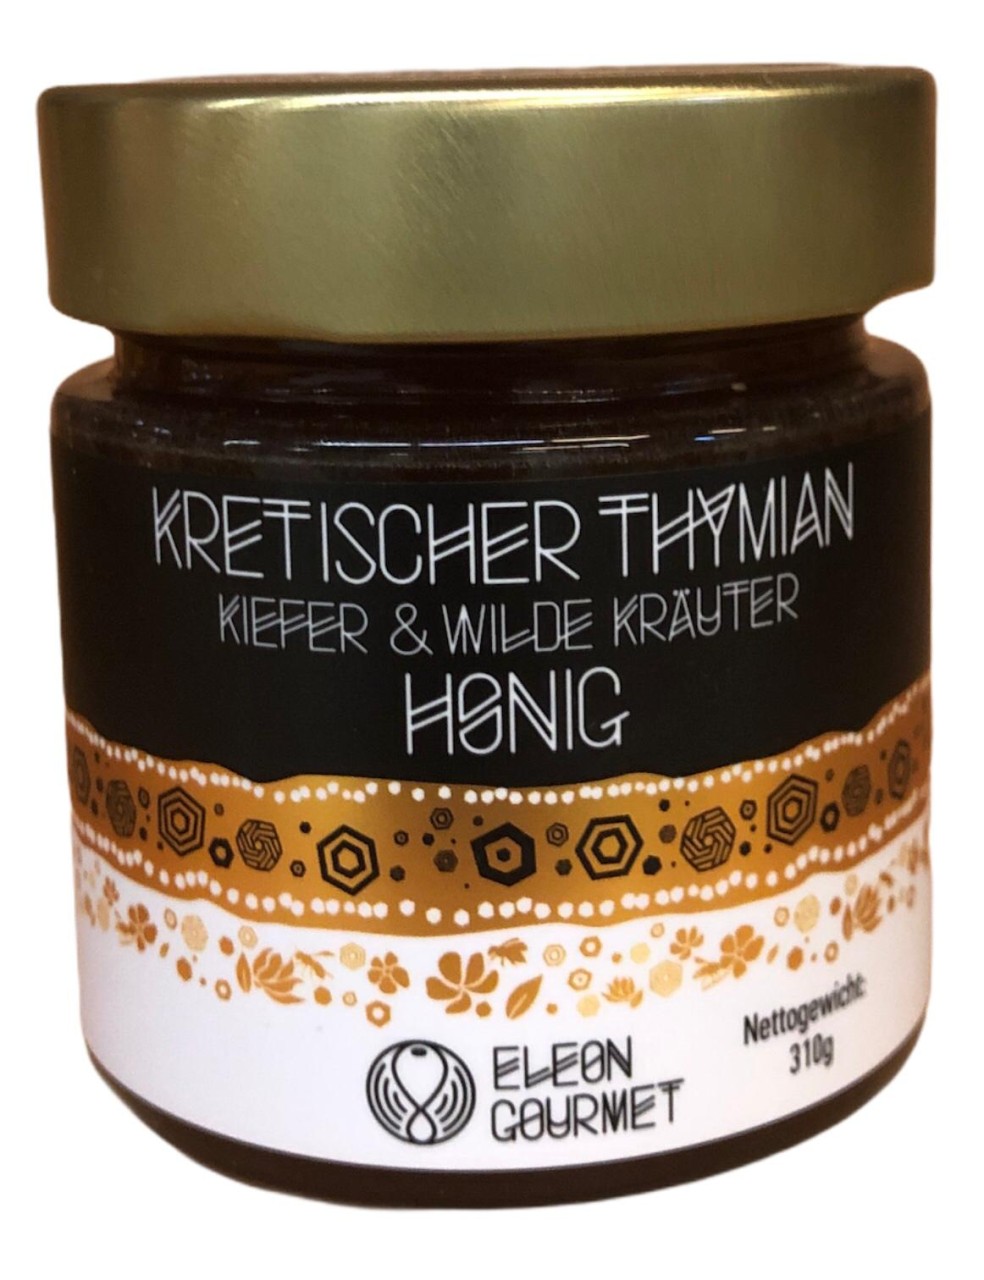 Elon Gourmet Kretischer Thymian - Kiefer & Wilde Kräuter Honig 310g